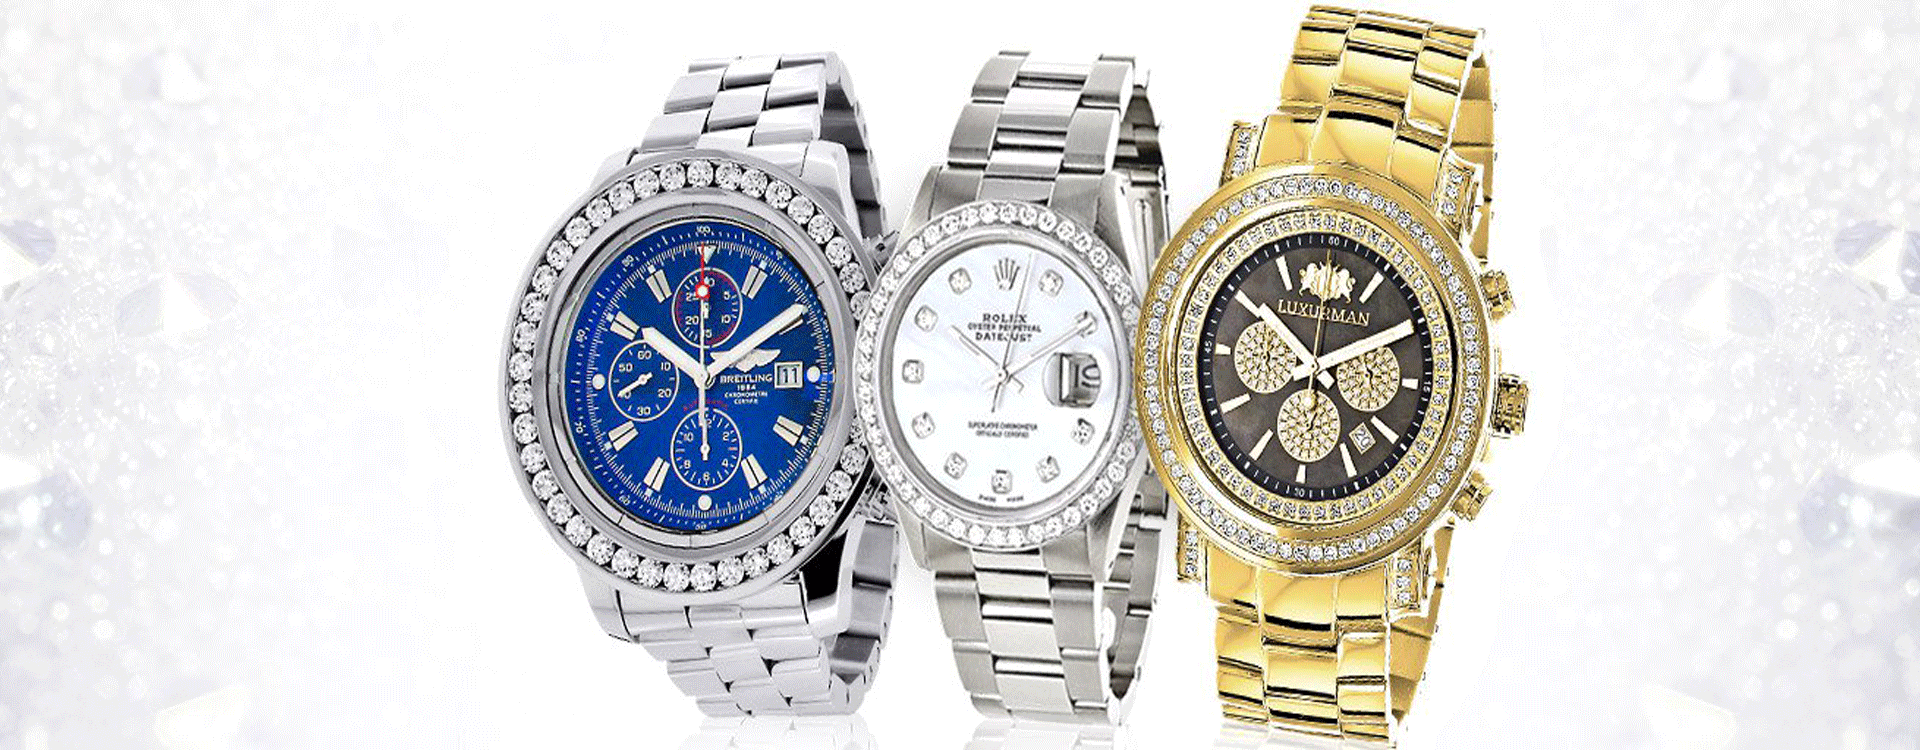 Diamond watches